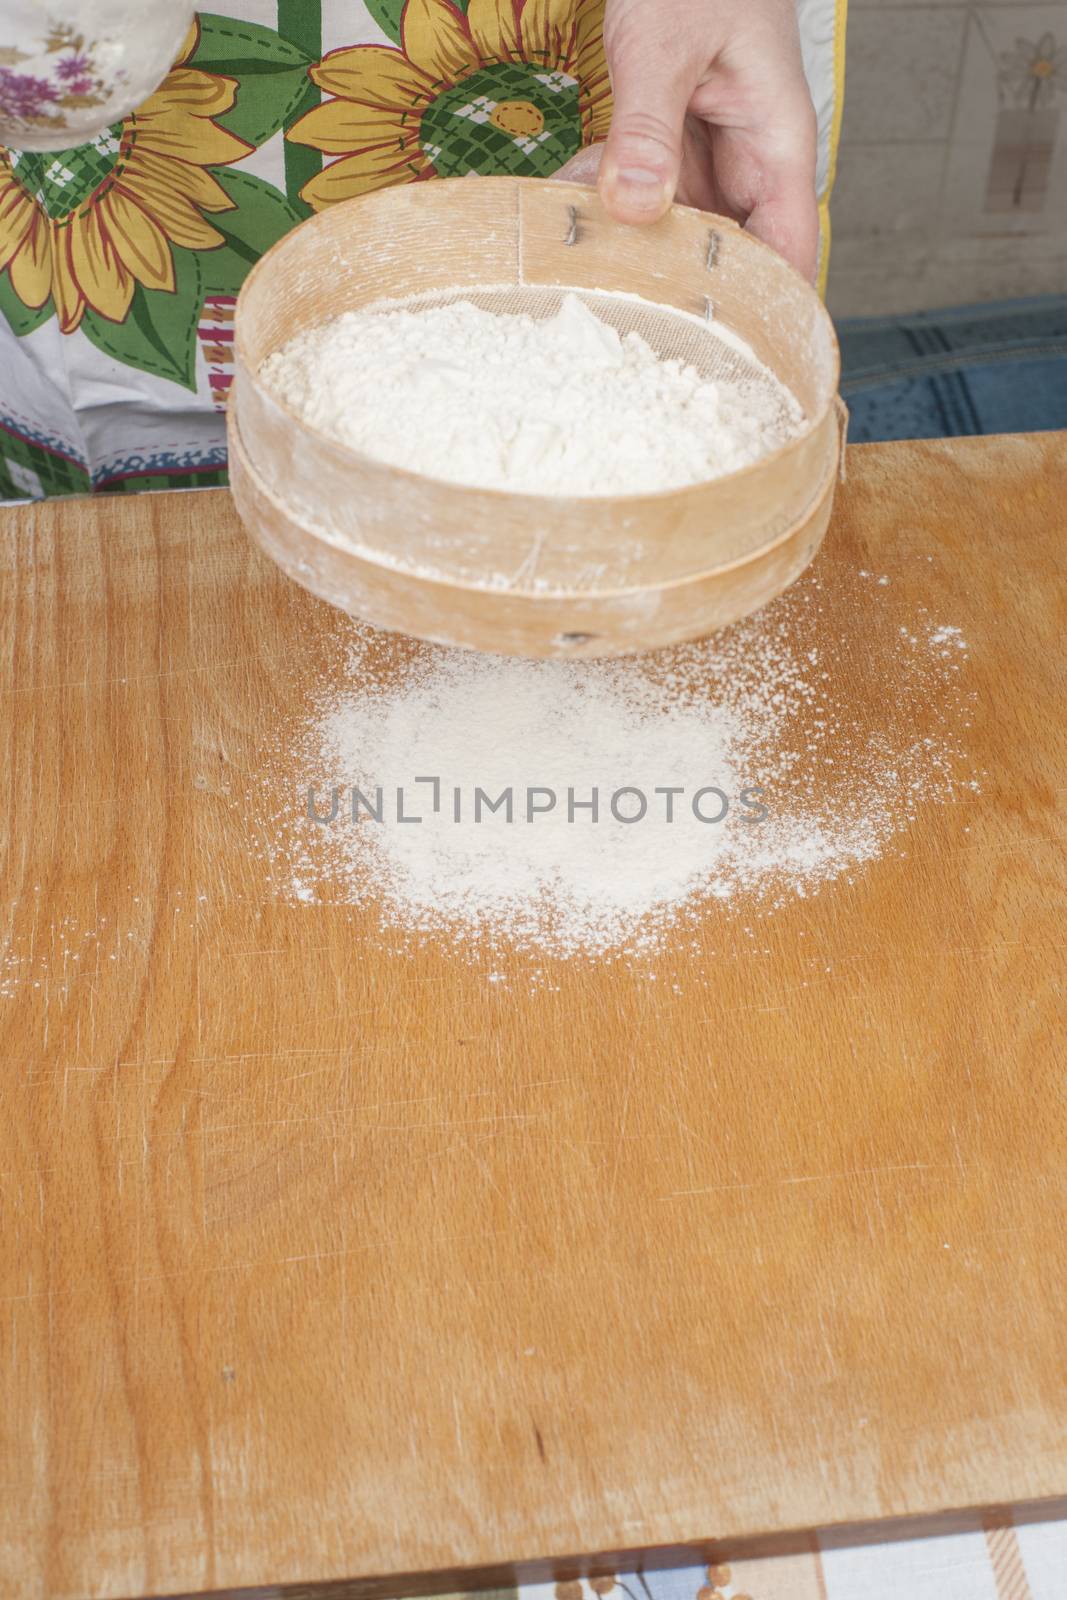 Women's hands prepairing flour before baking pie.